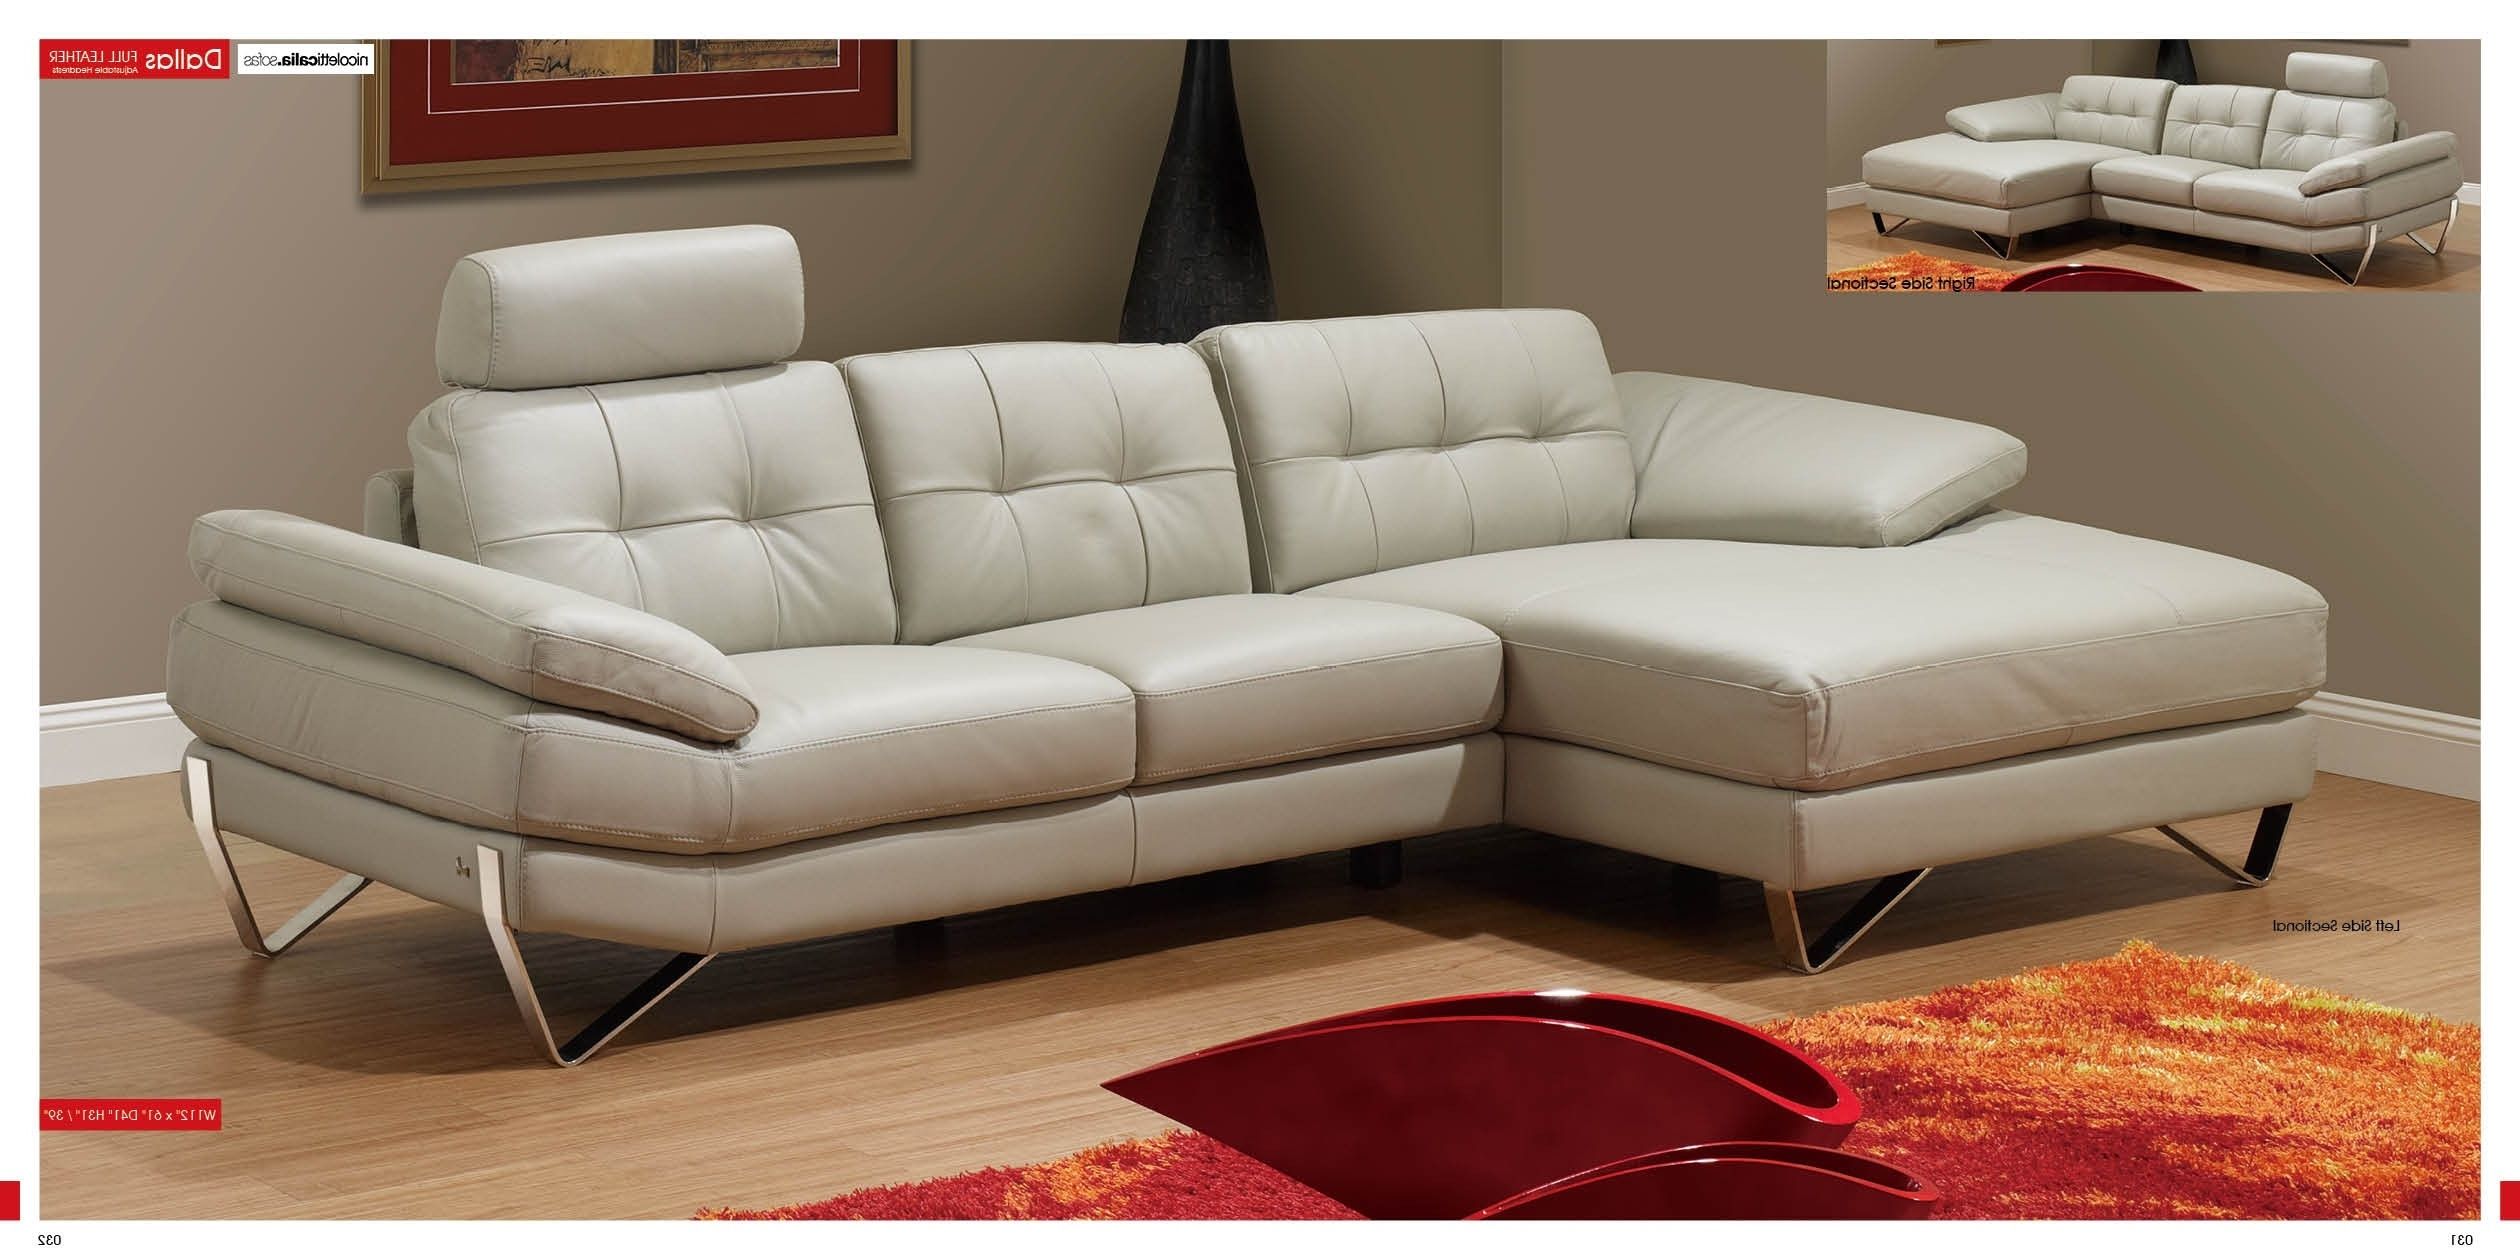 Preferred Furniture & Sofa: Glamorous Interior Furniture Designhavertys Within Sectional Sofas In Savannah Ga (View 9 of 15)